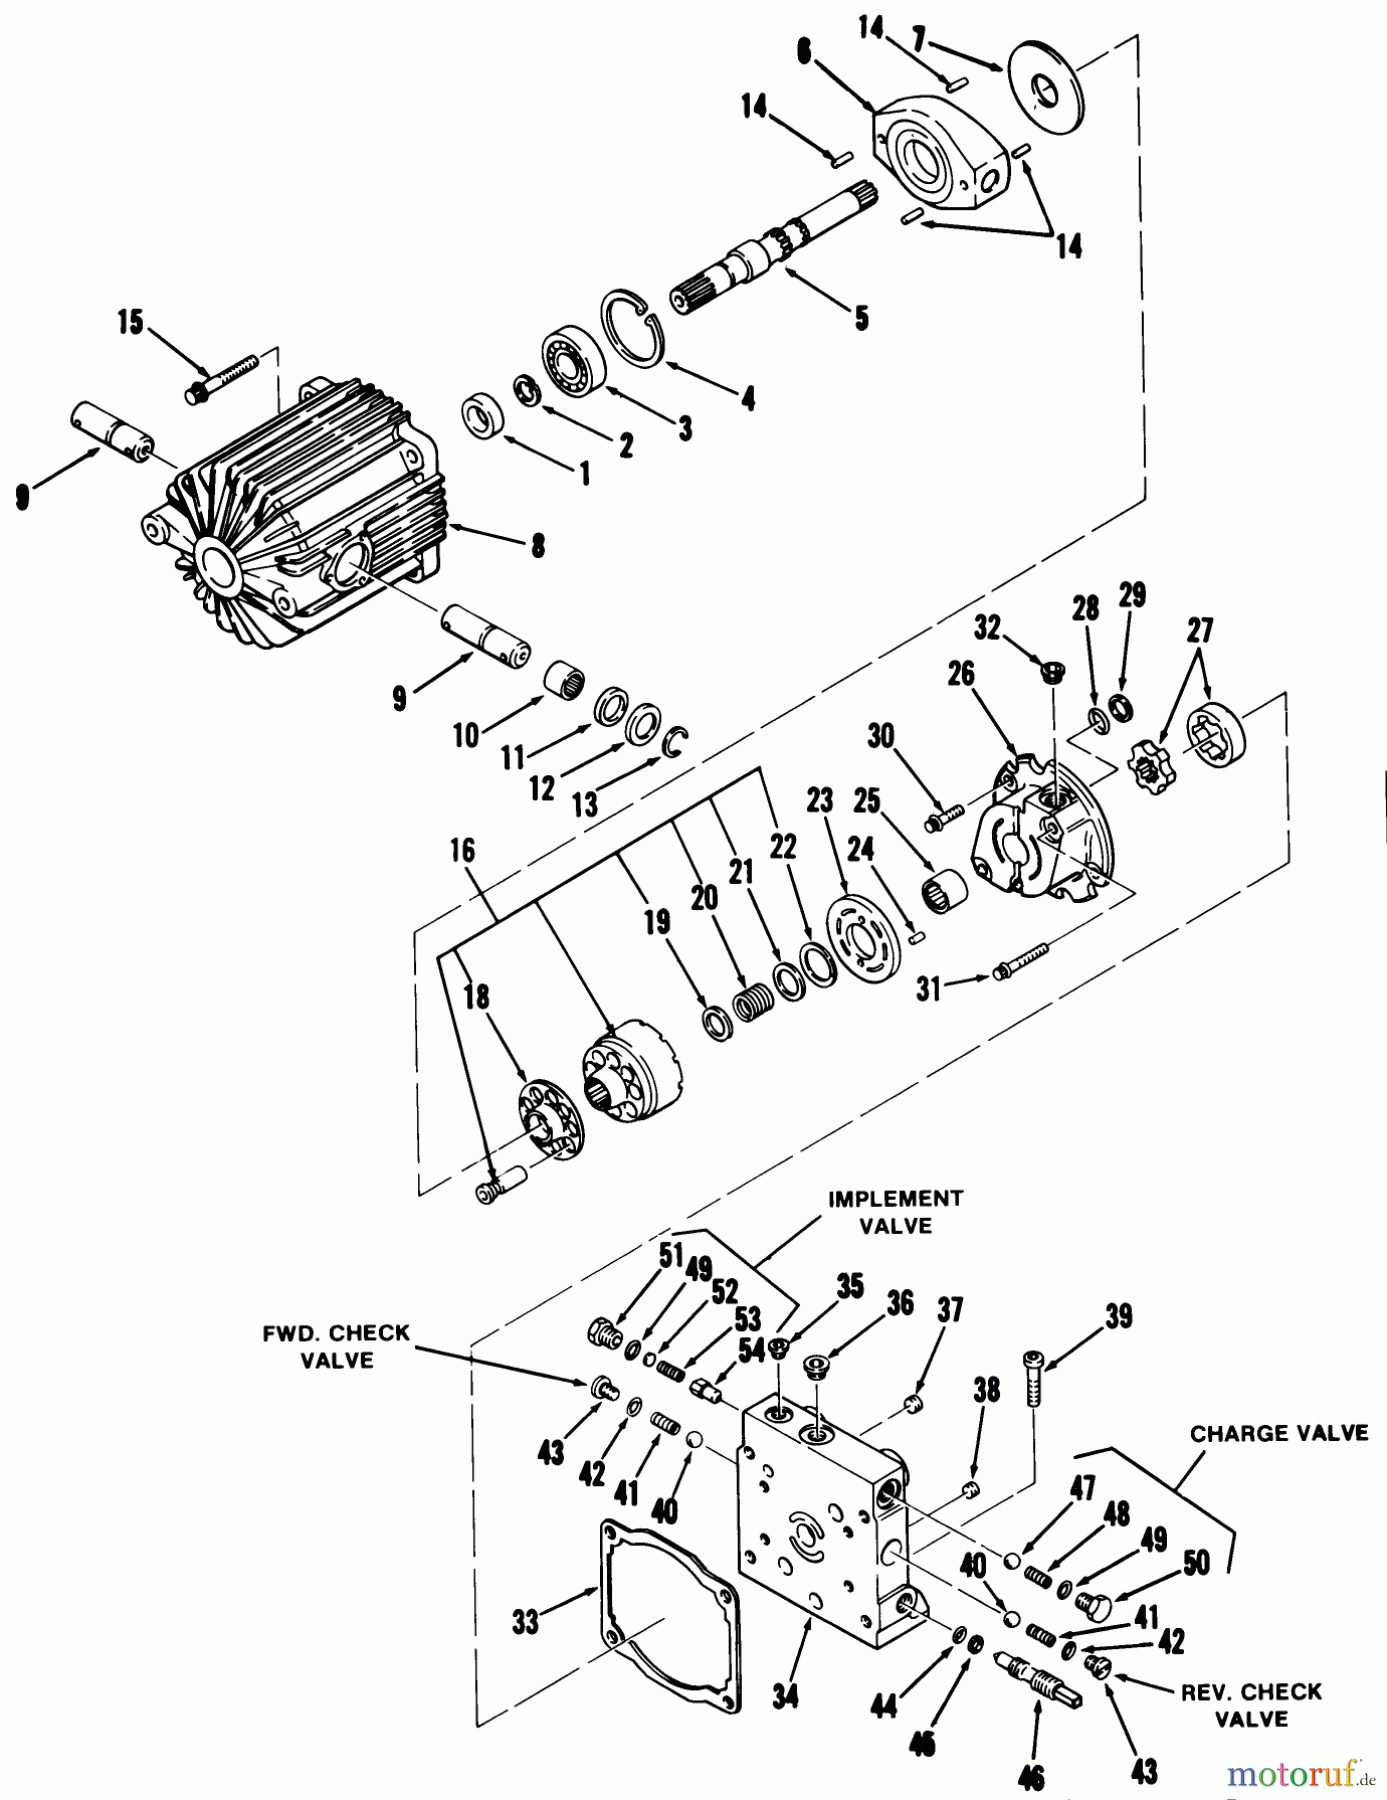  Toro Neu Mowers, Lawn & Garden Tractor Seite 2 81-20KS01 (D-200) - Toro D-200 Automatic Tractor, 1978 HYDROSTATIC TRANSMISSION-PUMP SECTION